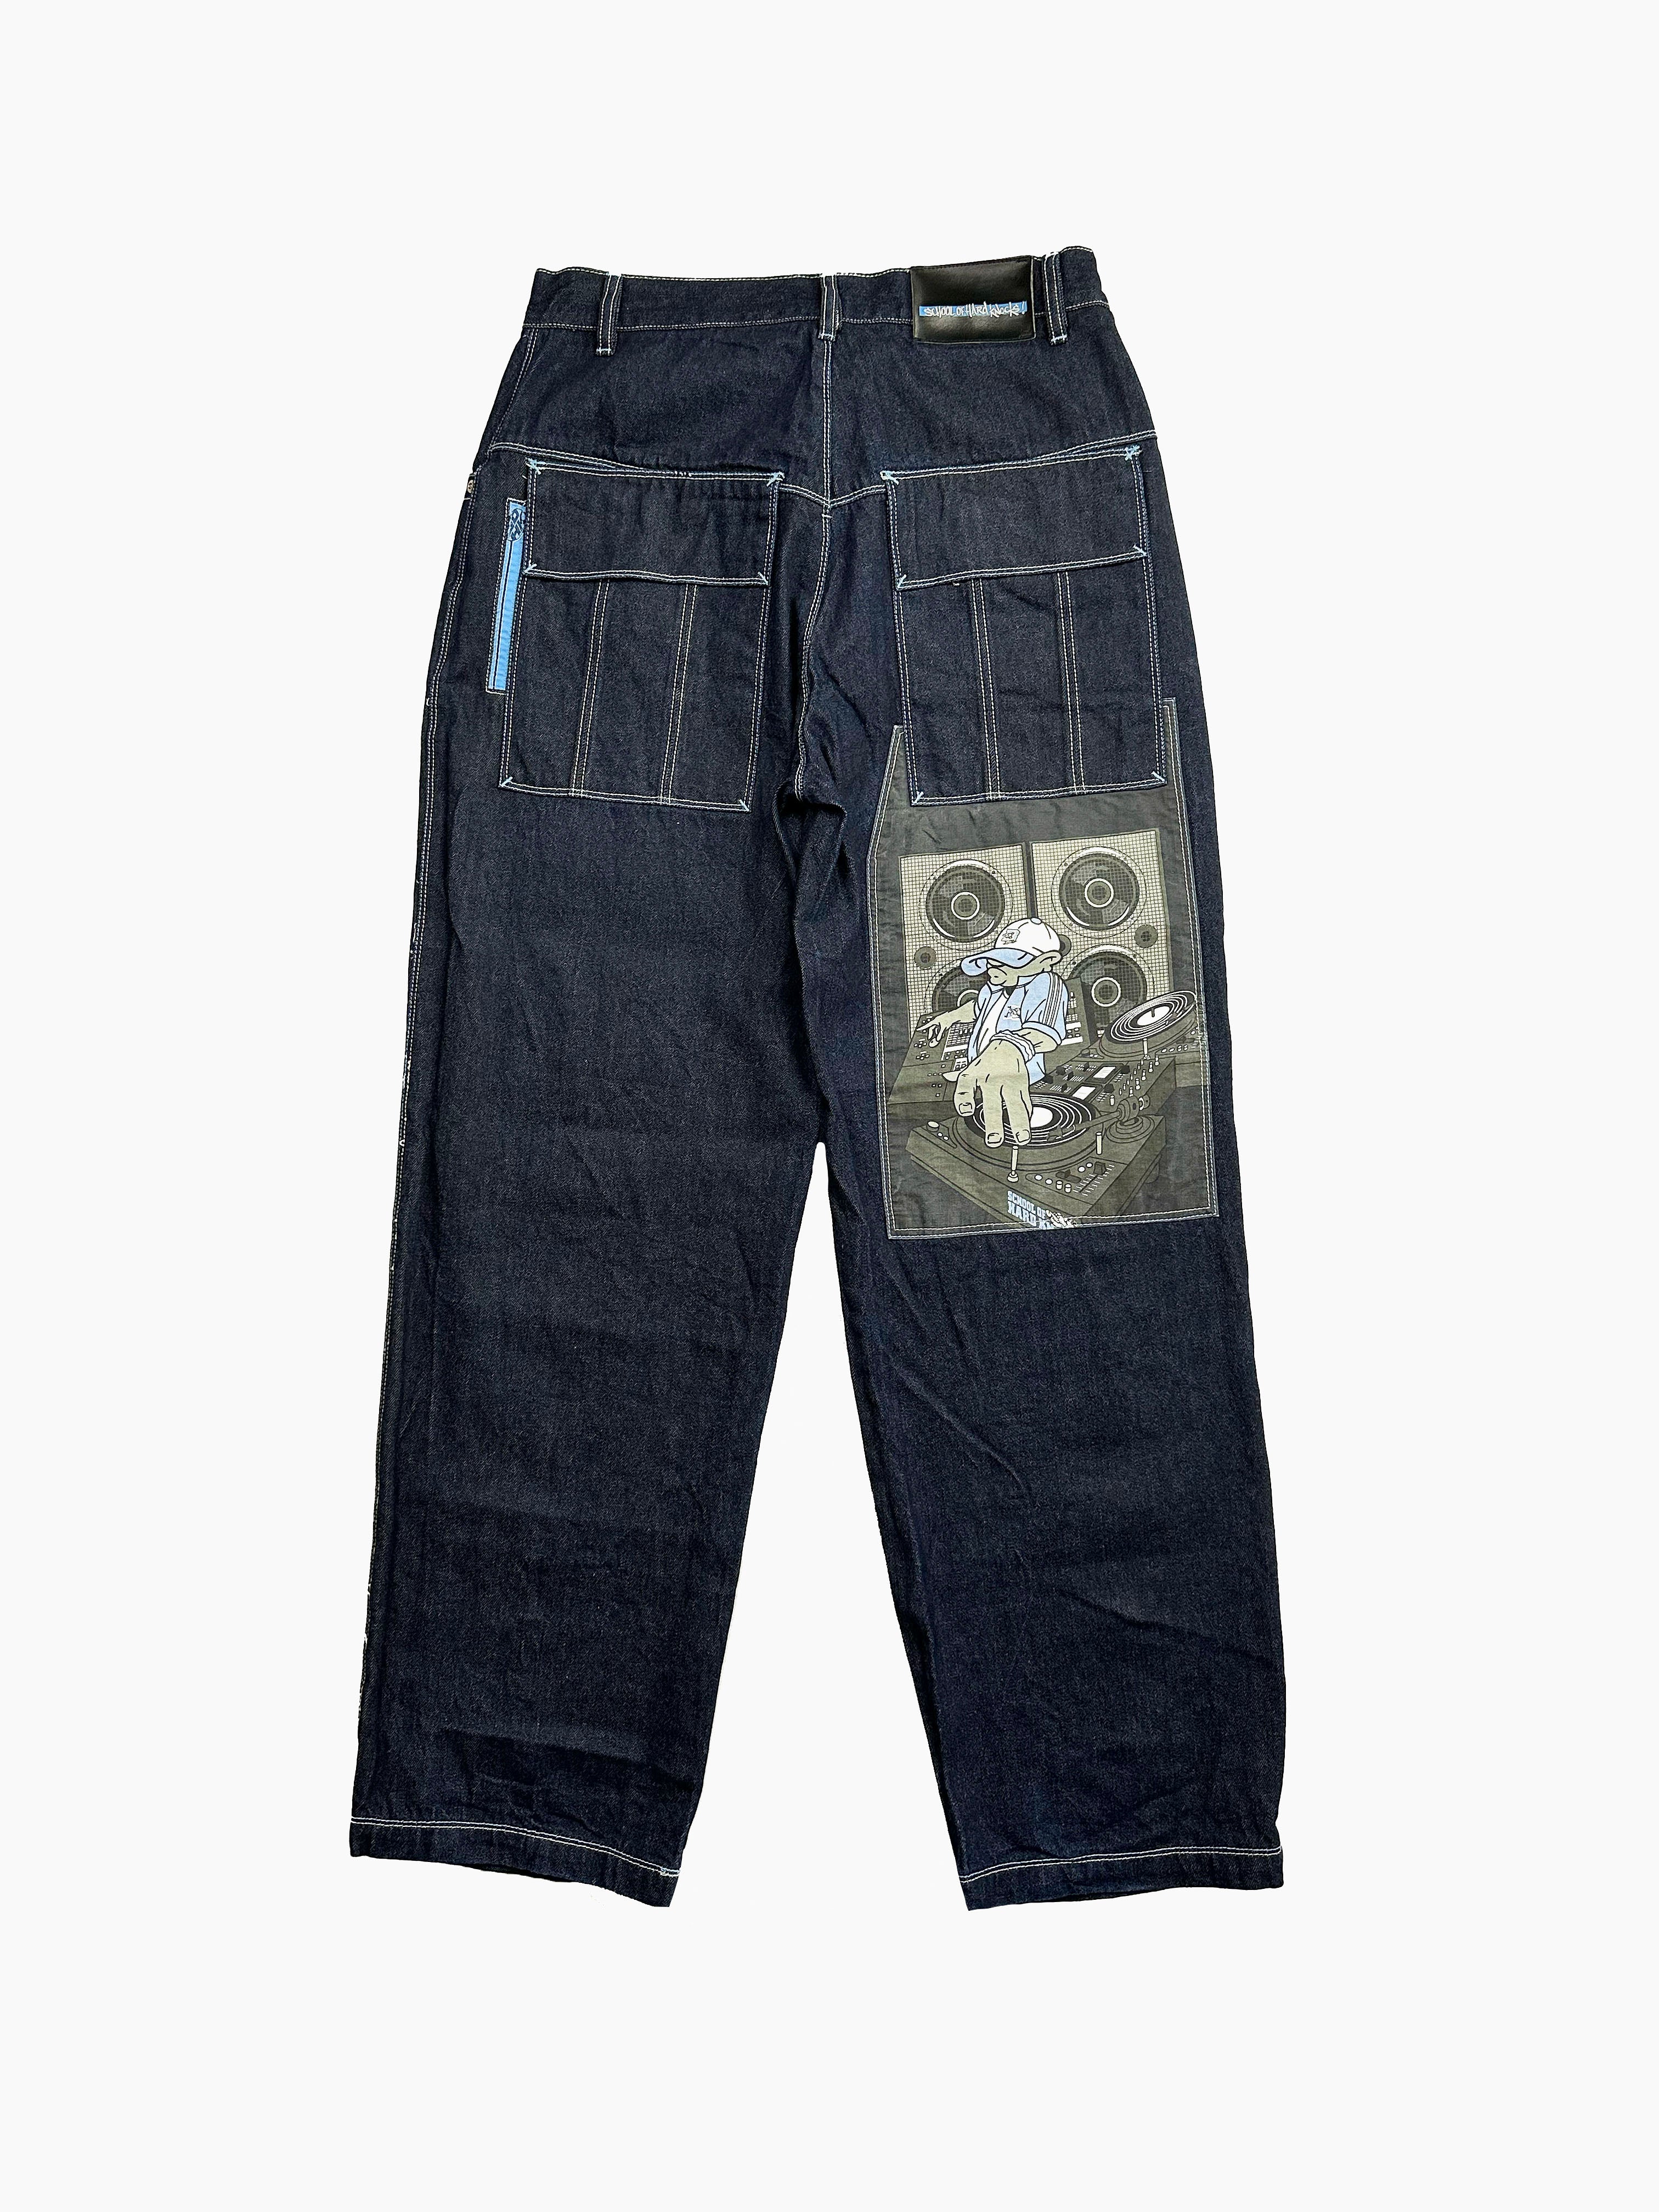 SOHK Denim Character Indigo Jeans 90's